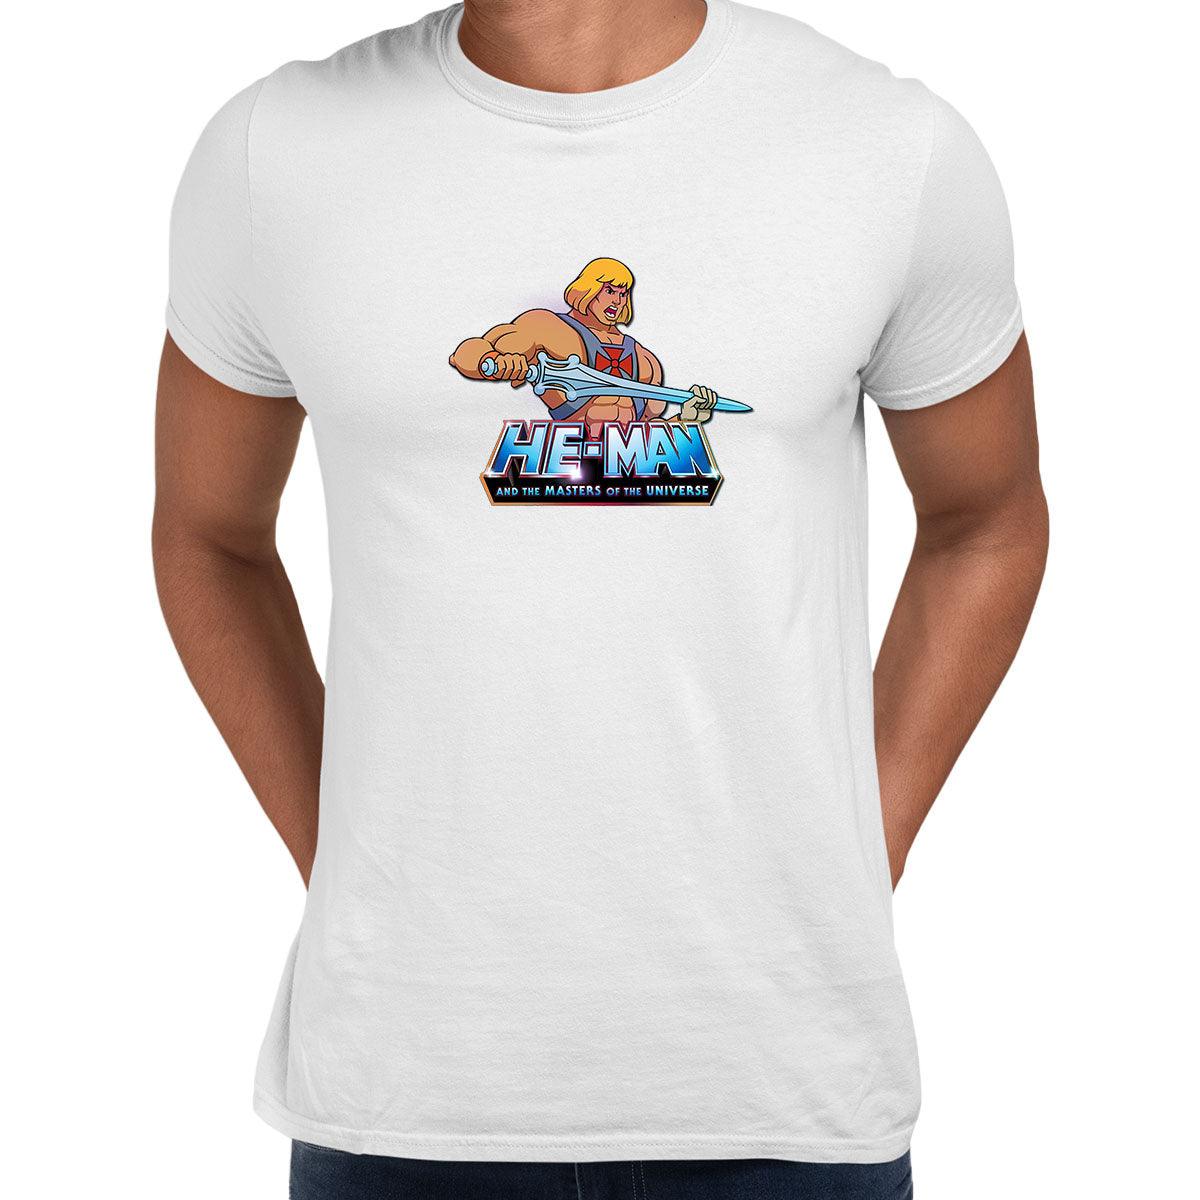 He-Man Netflix Movie-Shirt Novelty Monsters Action Top Typography Unisex T-shirt - Kuzi Tees